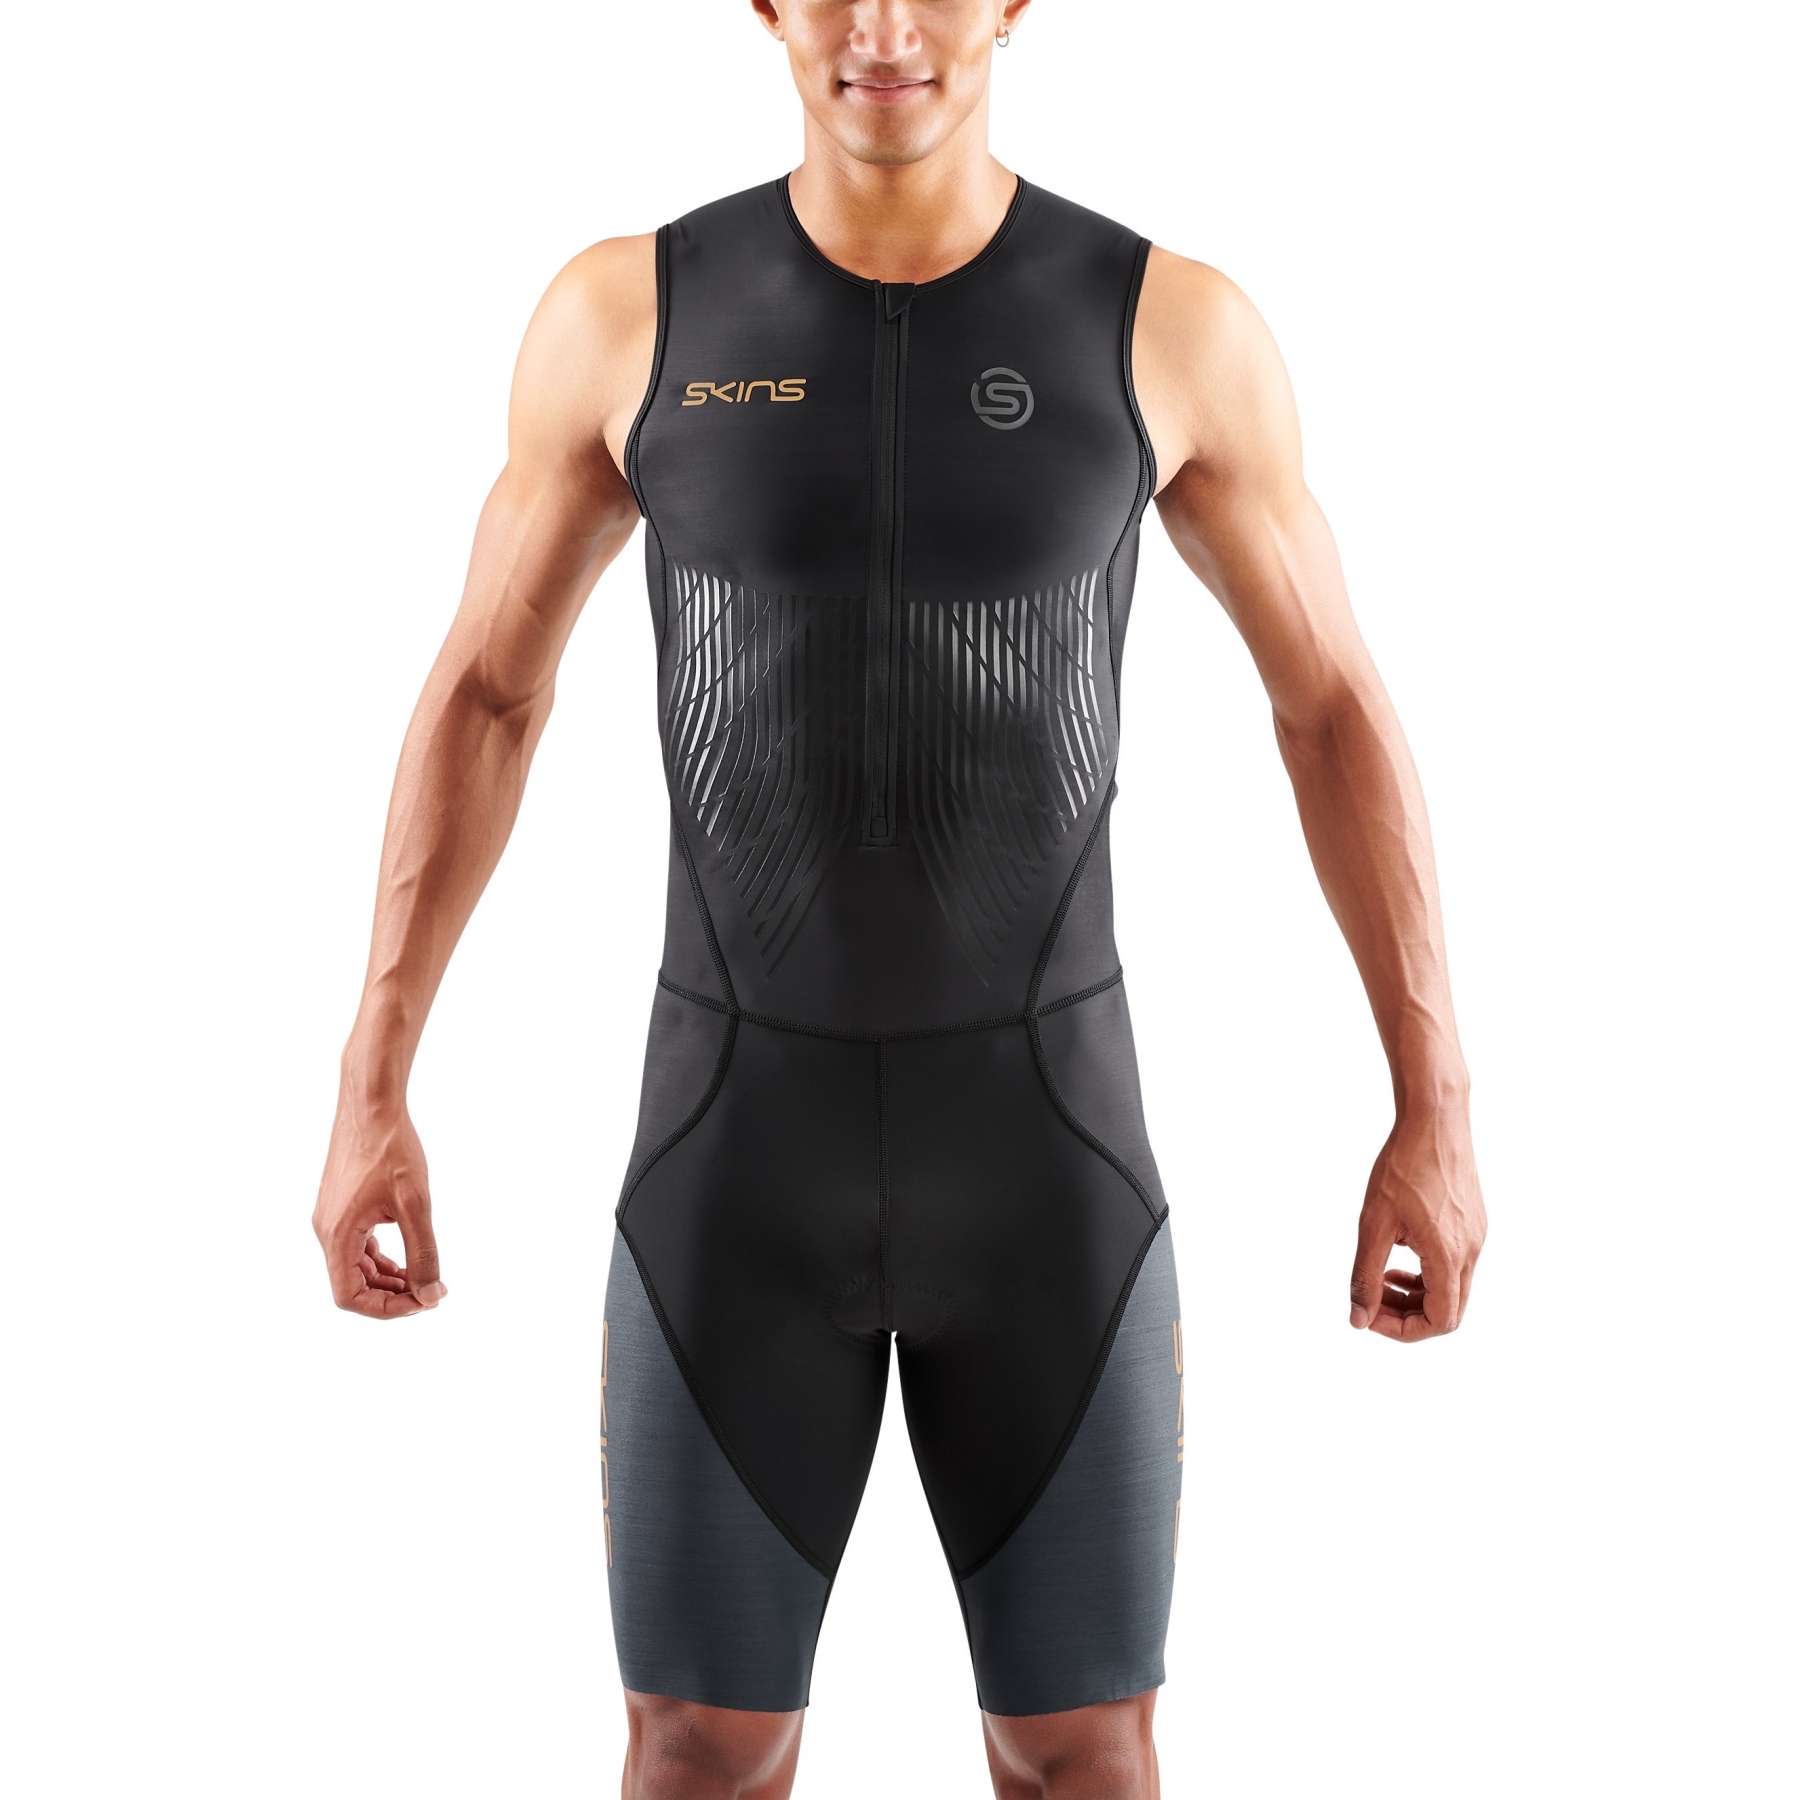 Productfoto van SKINS TRI Elite Skinsuit zonder Mouwen Heren - Black/Carbon